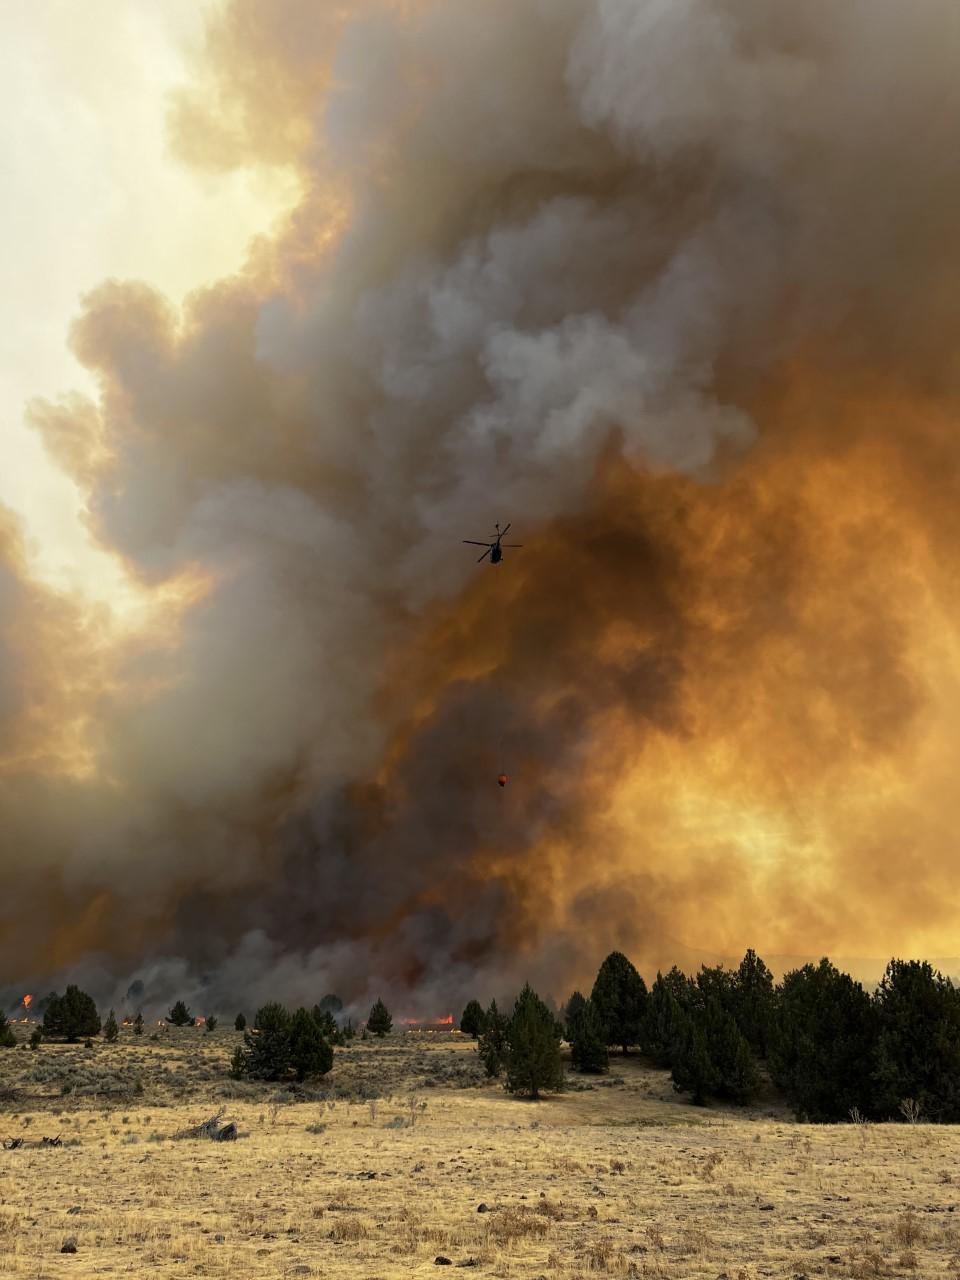 Photo of the Barnes Fire taken by the Klamath Hot Shots